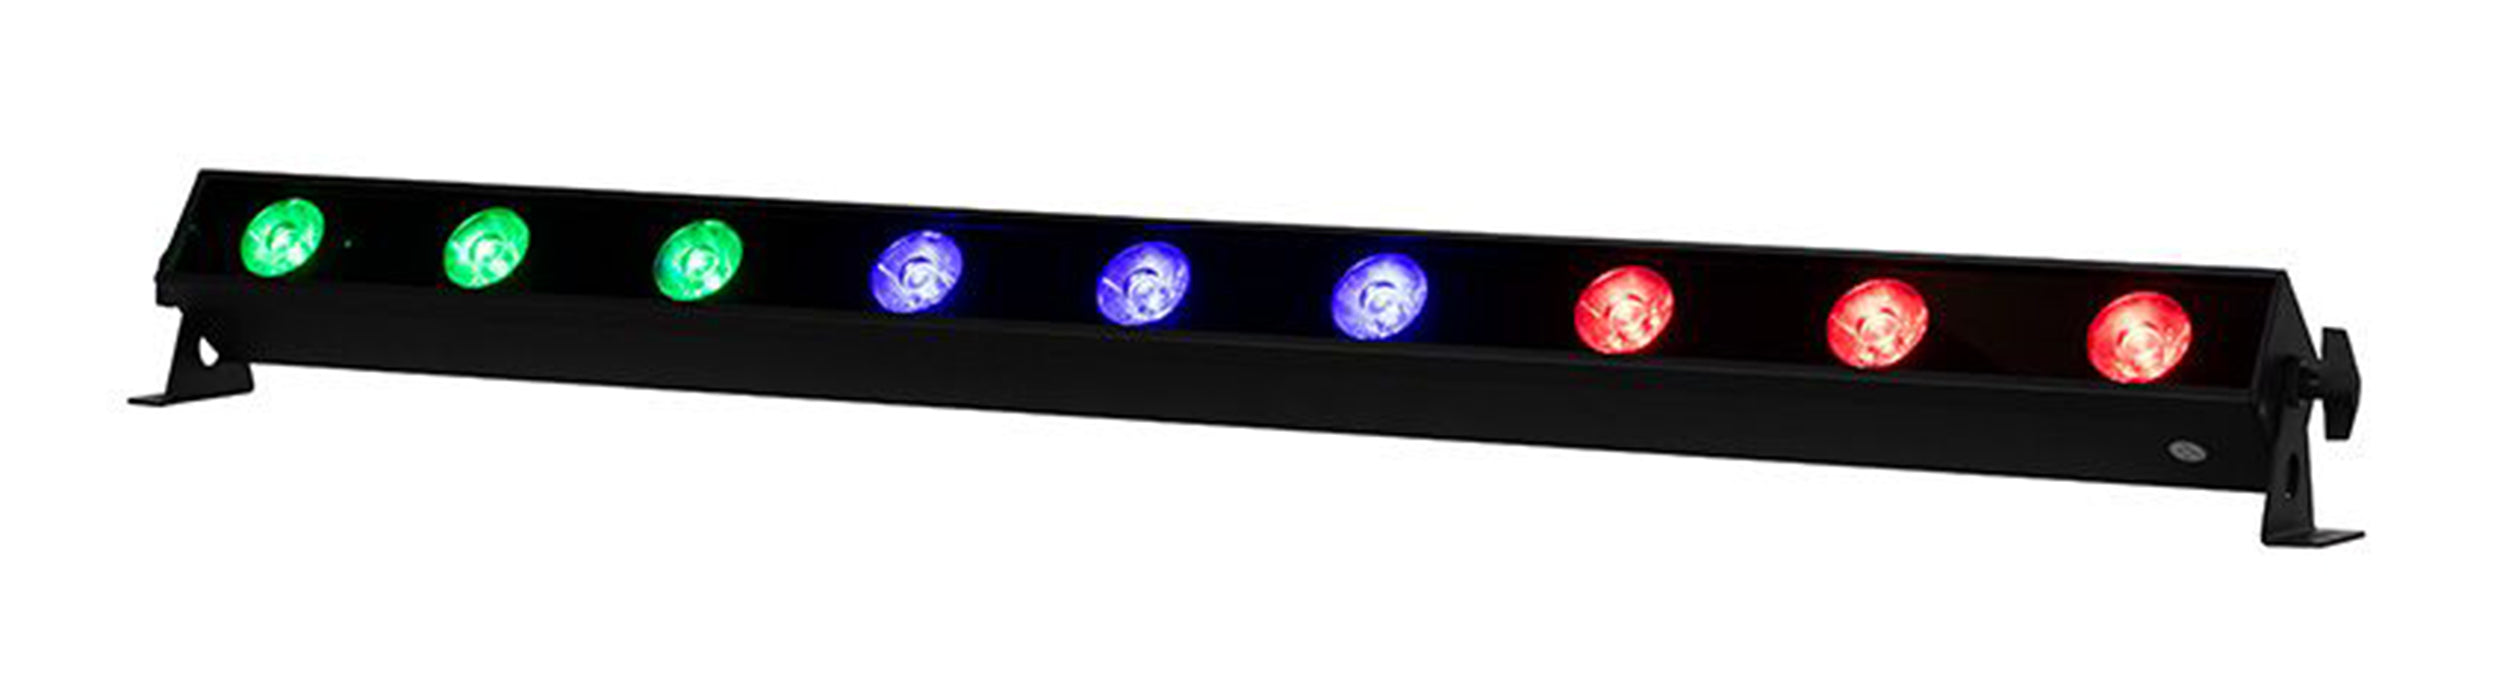 ADJ UBL9H, RGBAL+UV Linear Light Bar with Diffusion Filter - 9 LEDs by ADJ